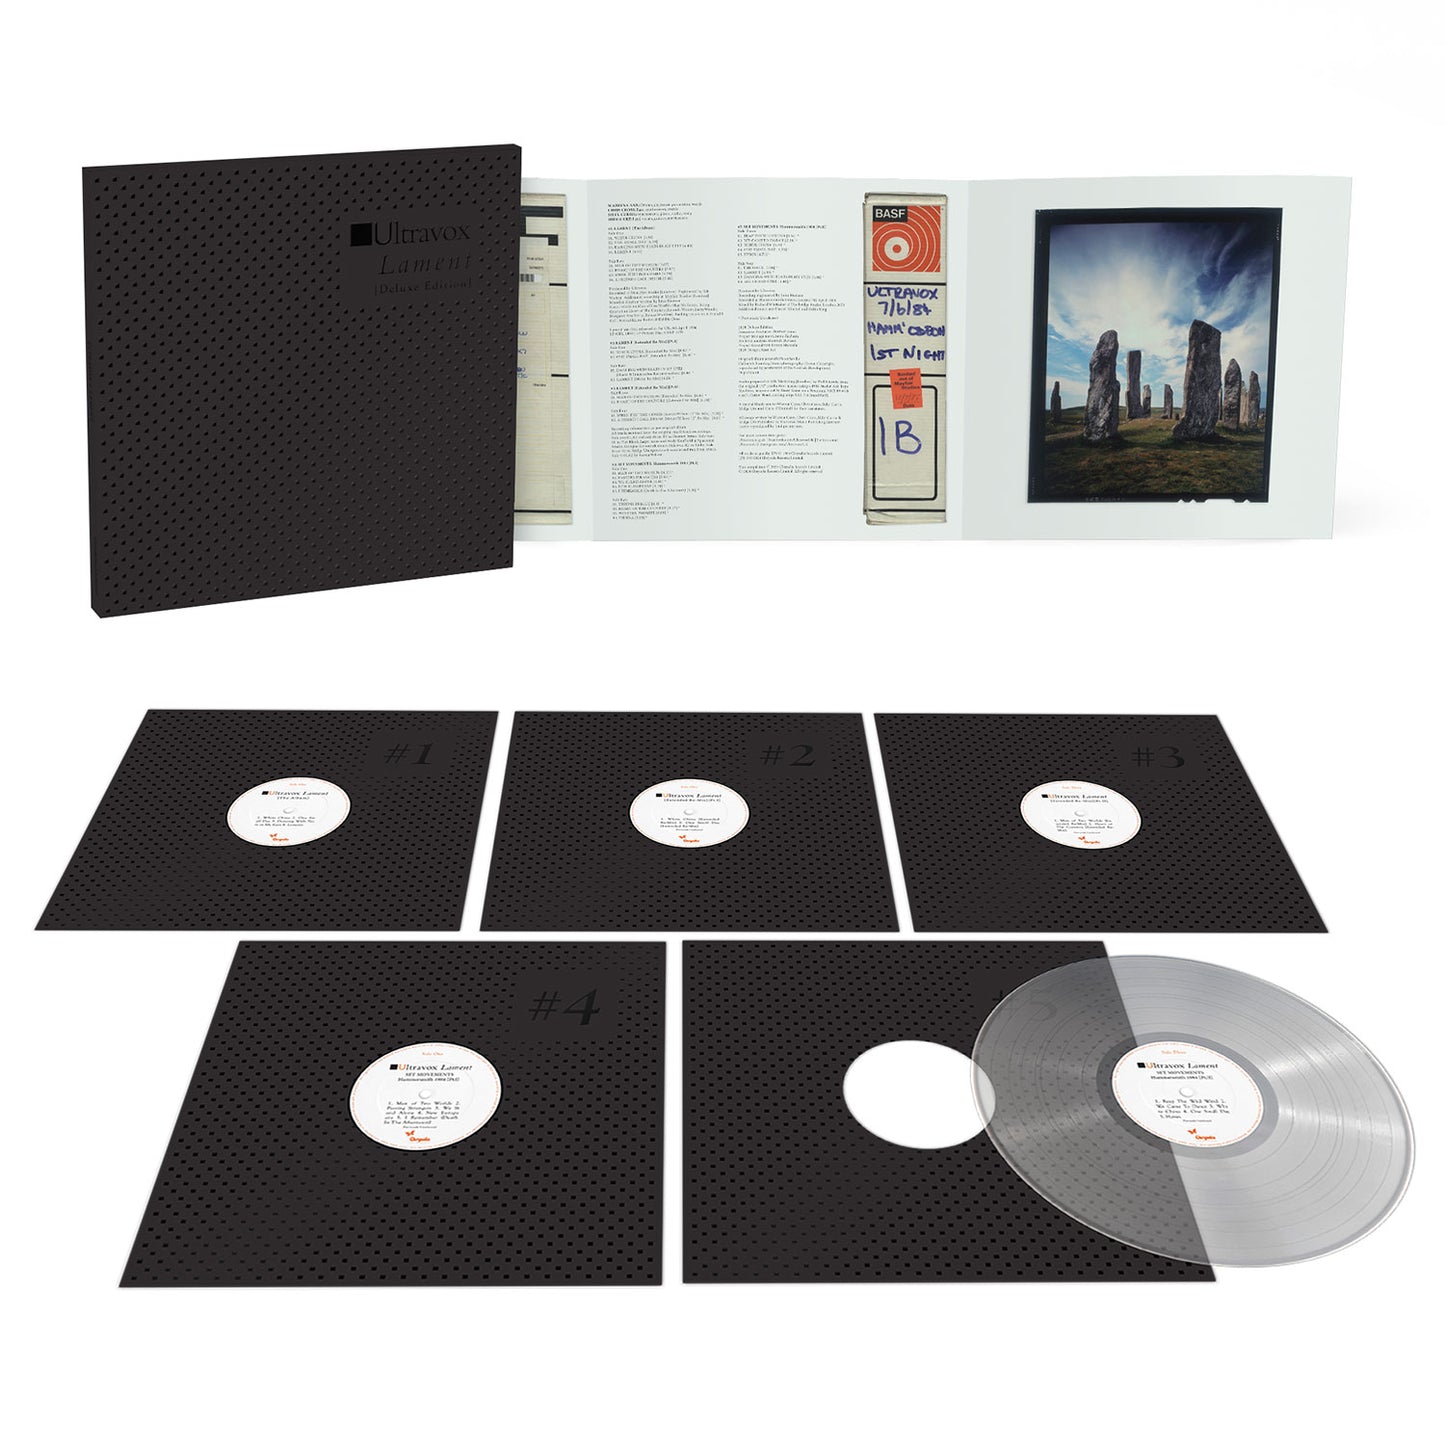 BUNDLE: Ultravox / Lament SDE Exclusive blu-ray audio + 5LP clear vinyl box